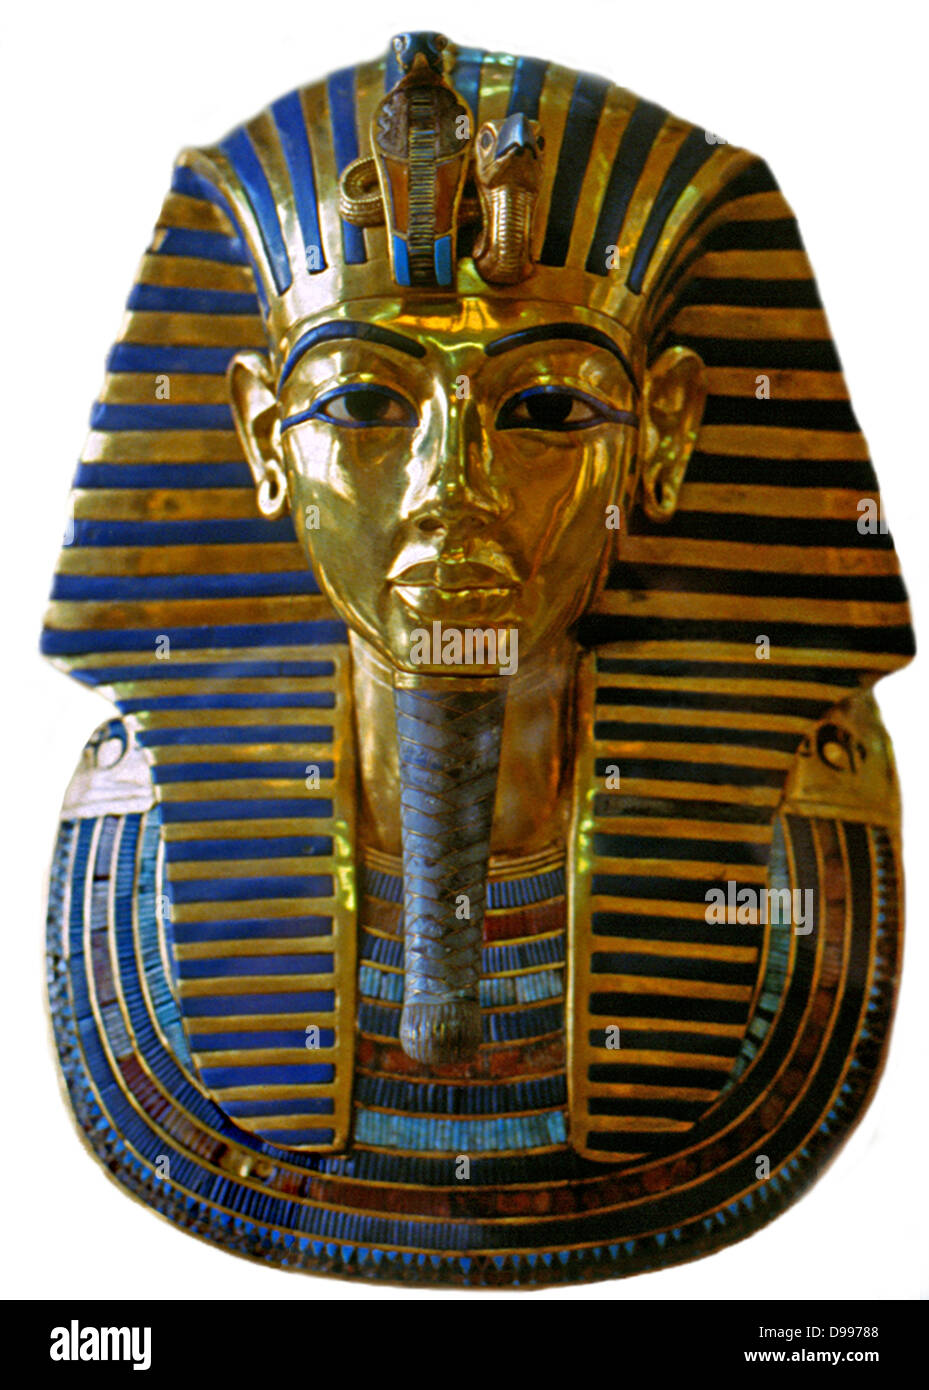 King tutankhamen hi-res stock photography and images - Alamy